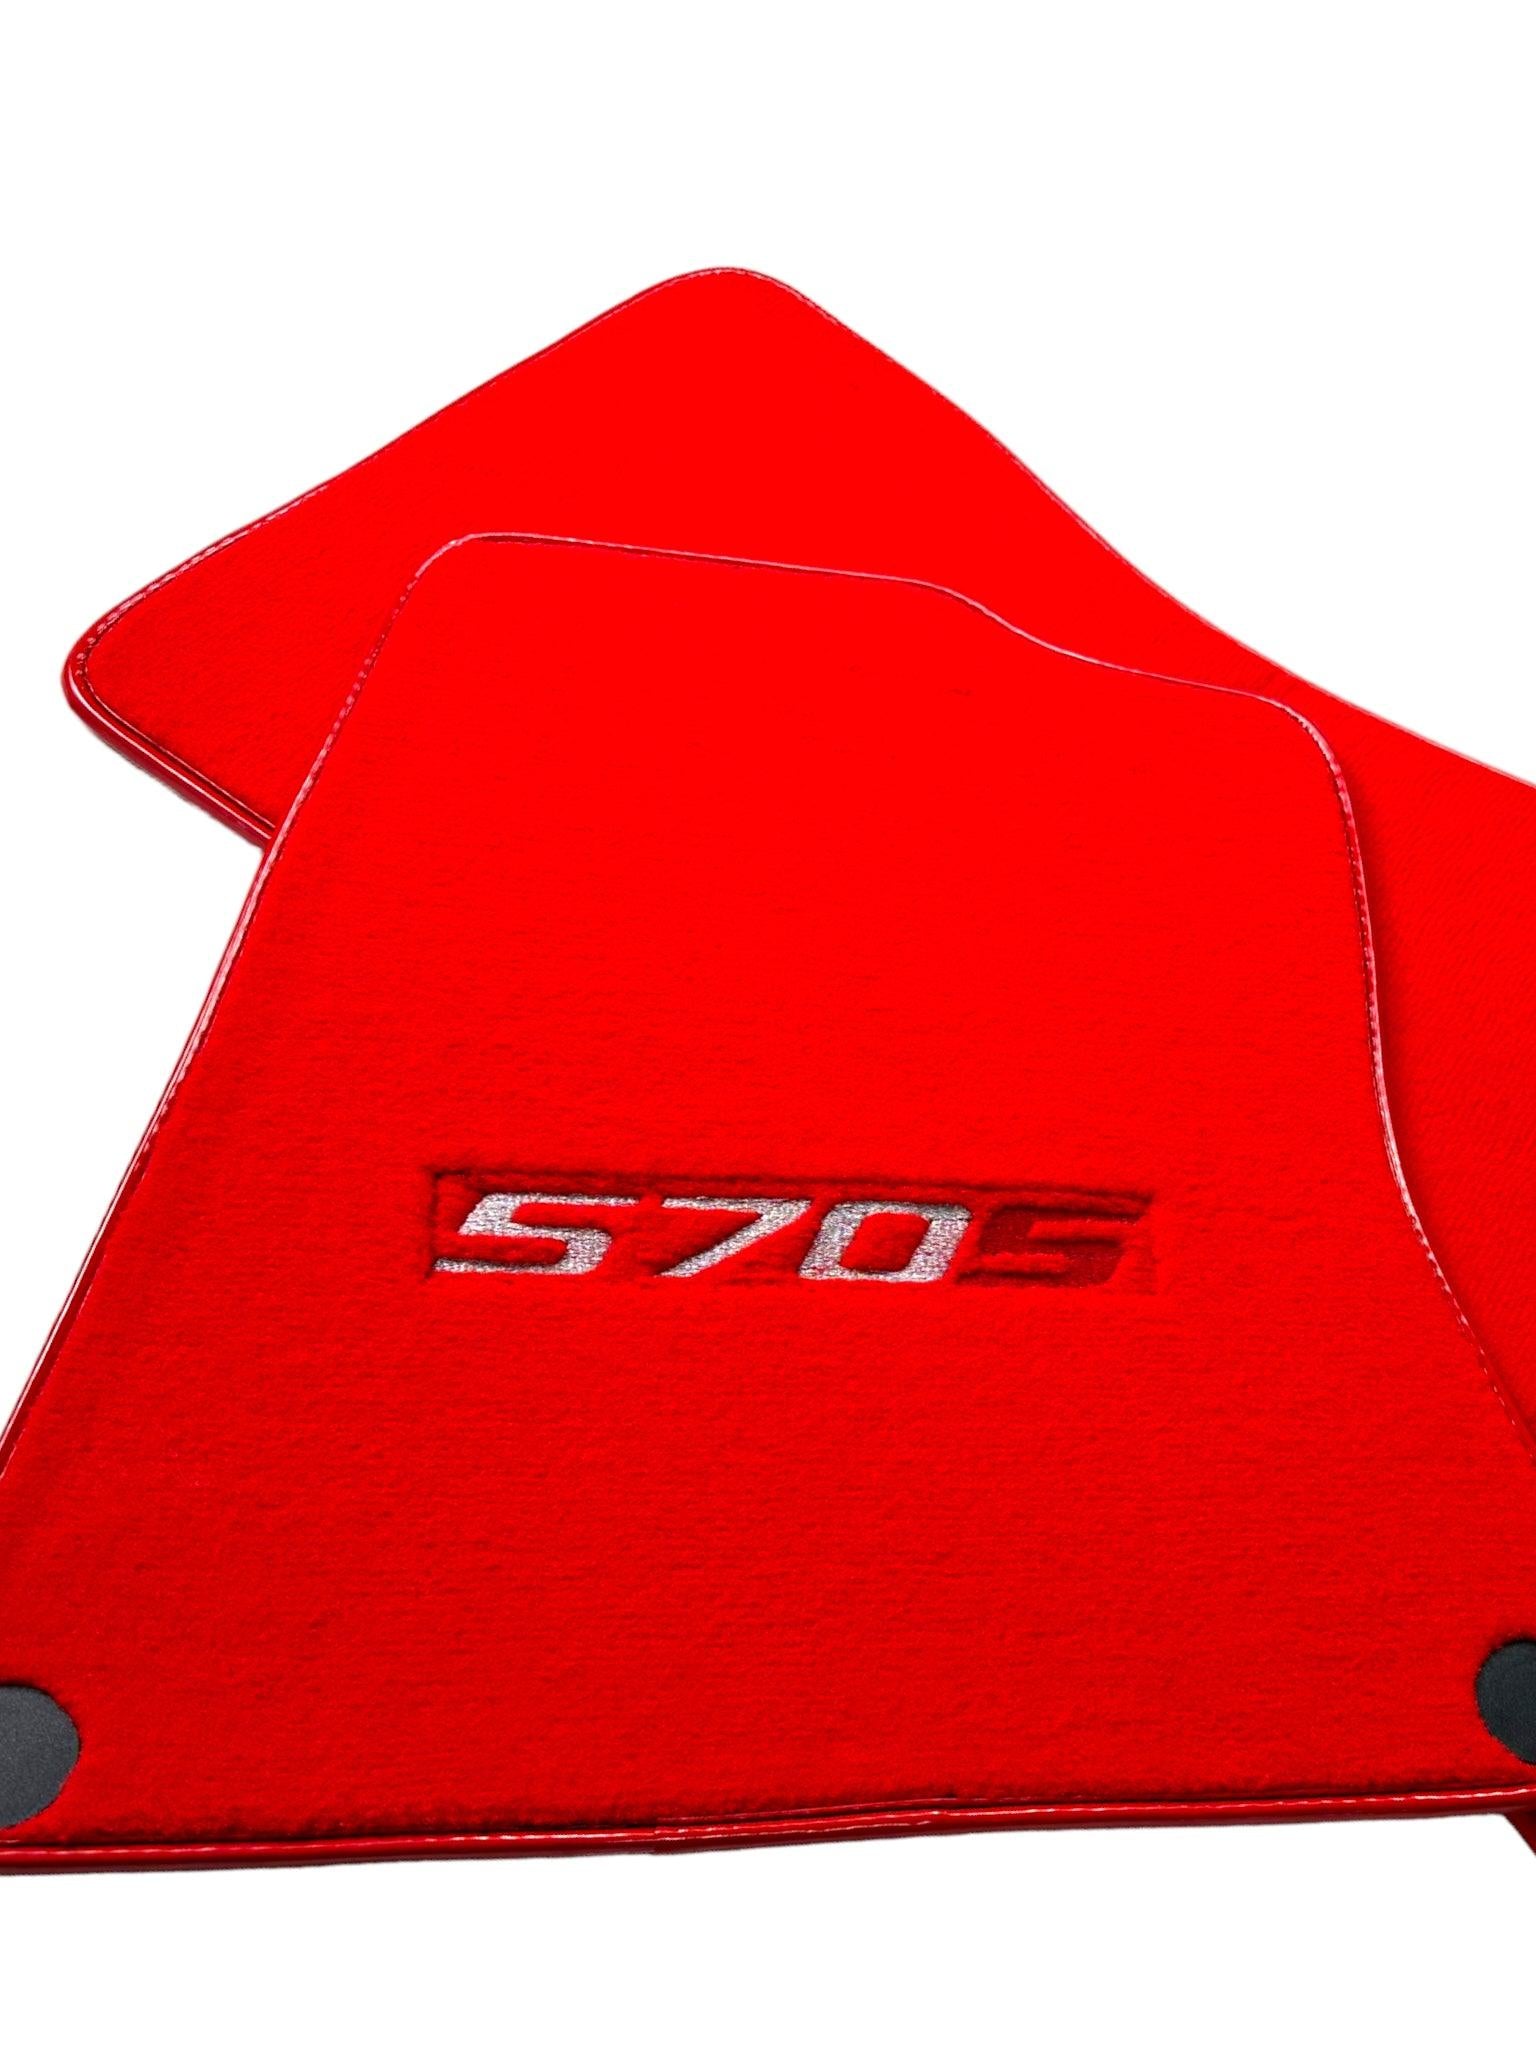 Floor Mats For McLaren 570S Red Tailored Carpets Set AutoWin - AutoWin